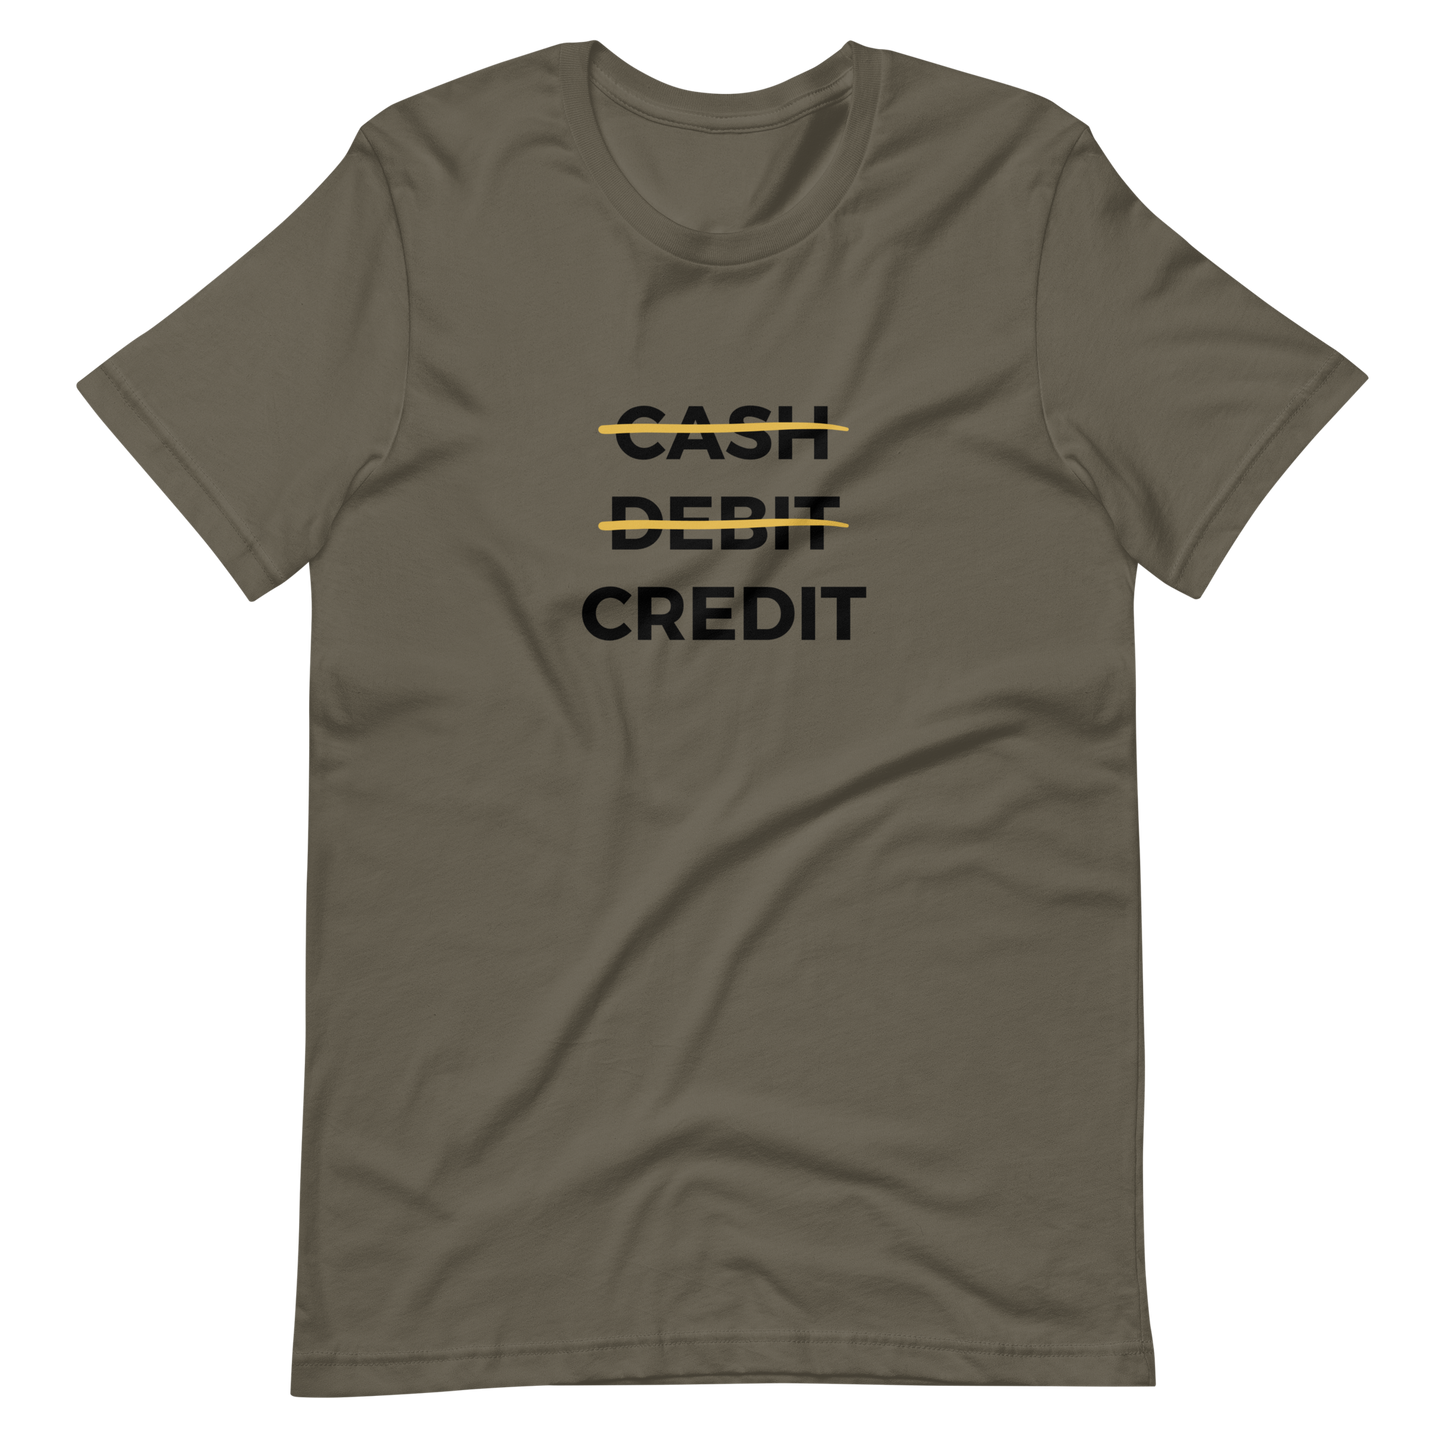 Cash, Debit, Credit